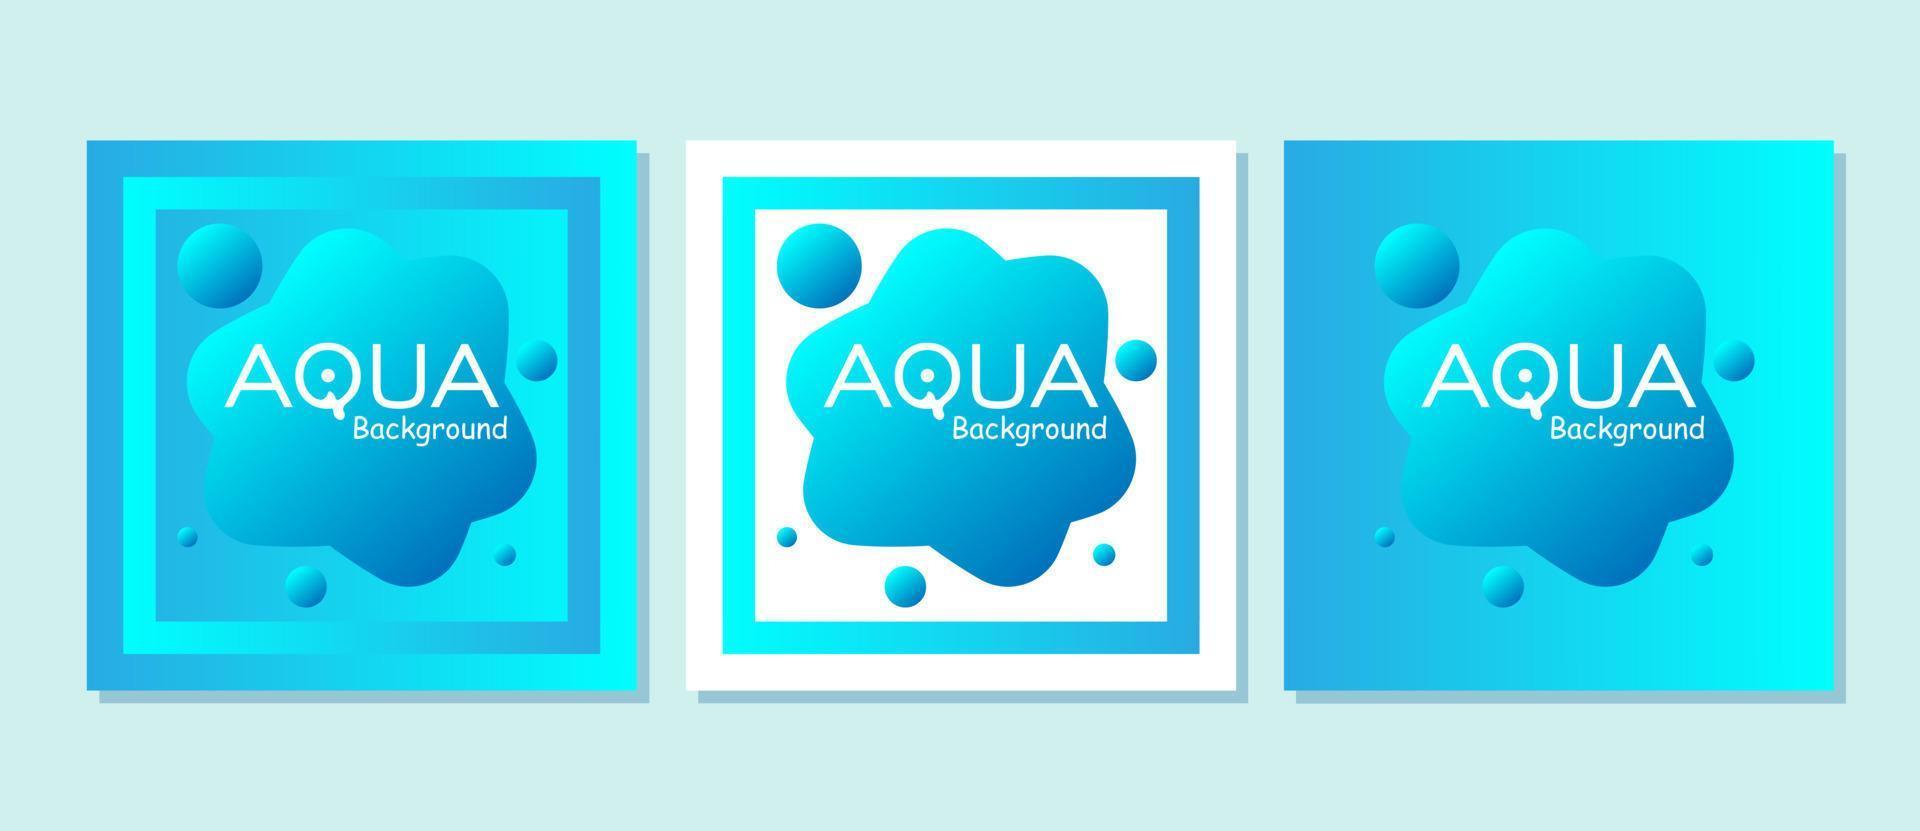 Aqua Background Vector With Gradient